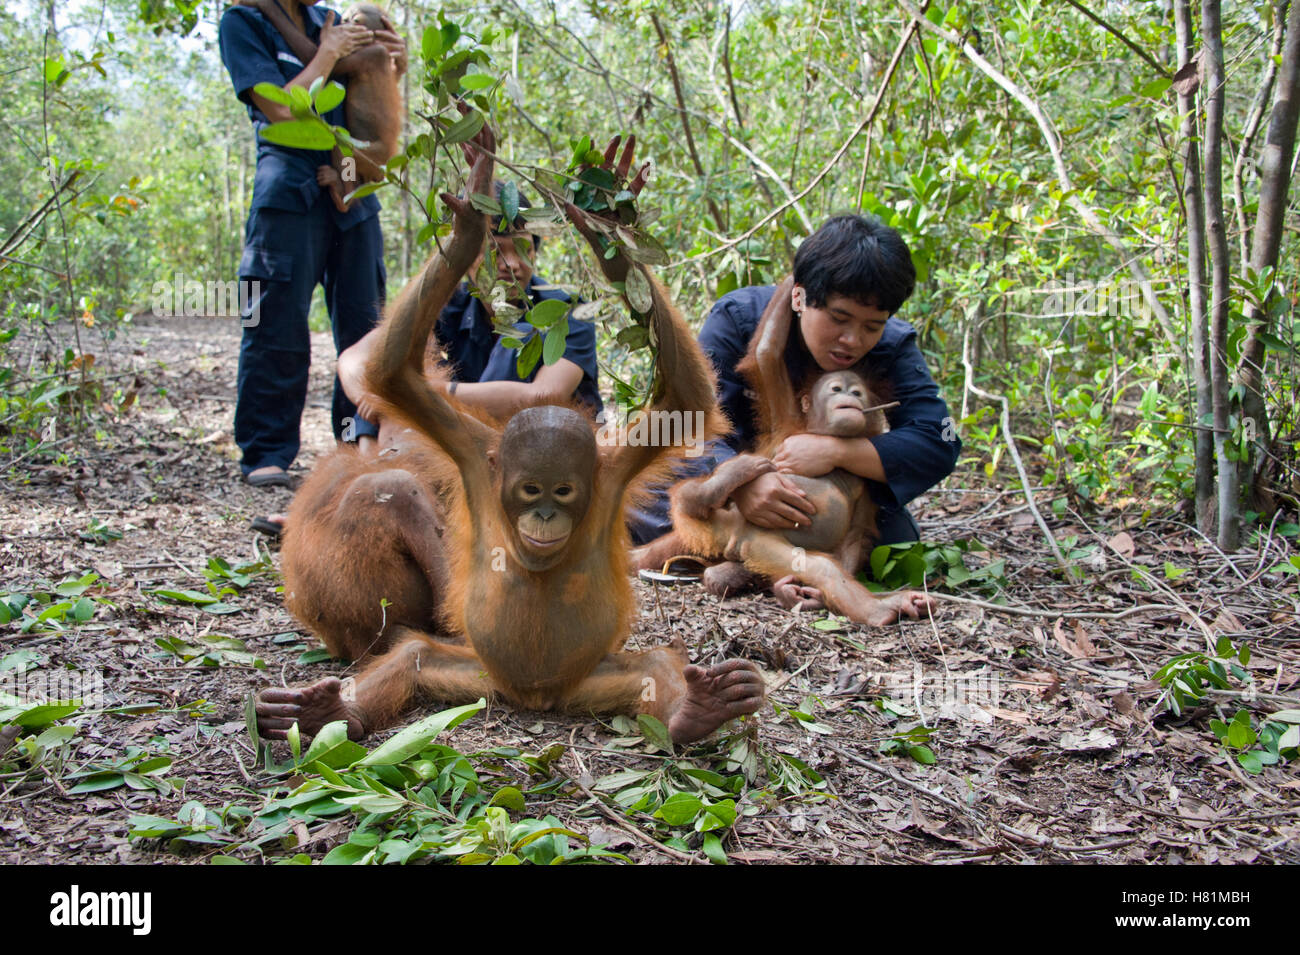 Orangutan (Pongo pygmaeus) caretakers with infants in forest during forest exploration and training program, Orangutan Care Stock Photo